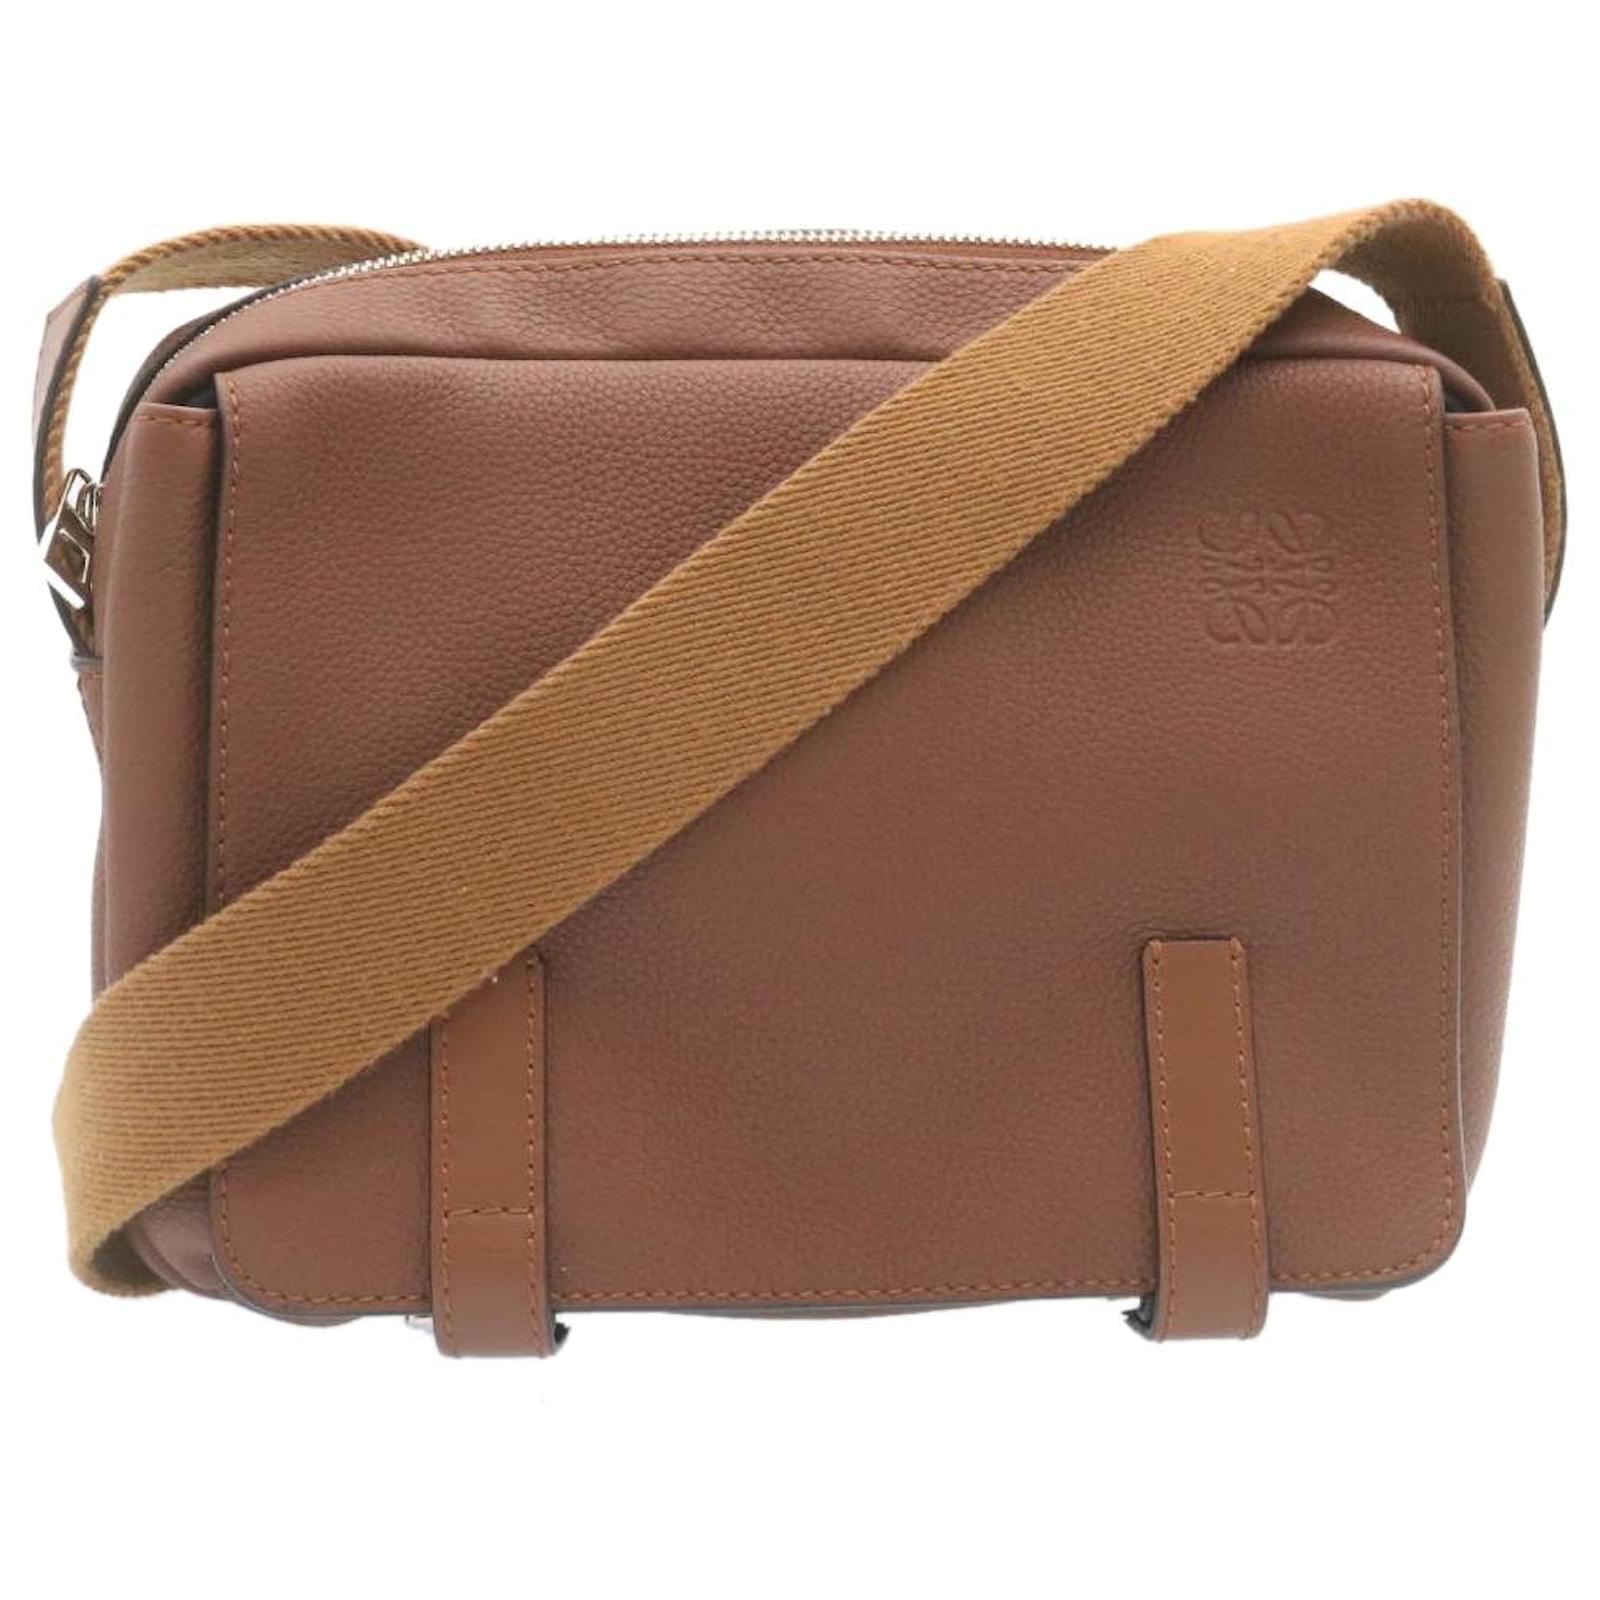 Loewe Anton Messenger Bag Leather